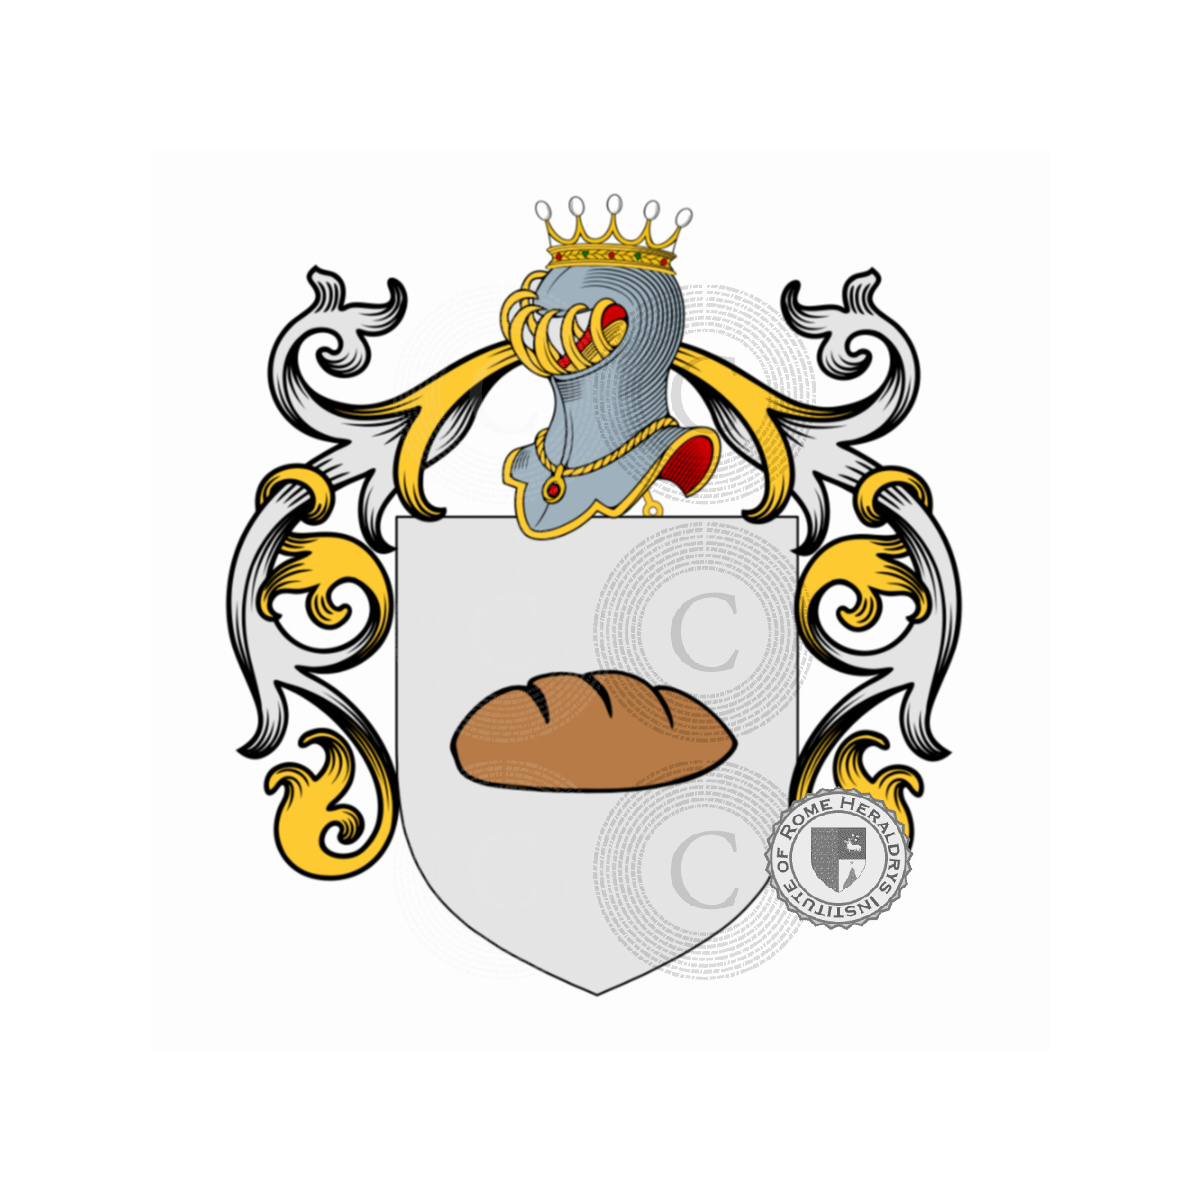 Escudo de la familiaPane, dal Pane,Panetta,Pani